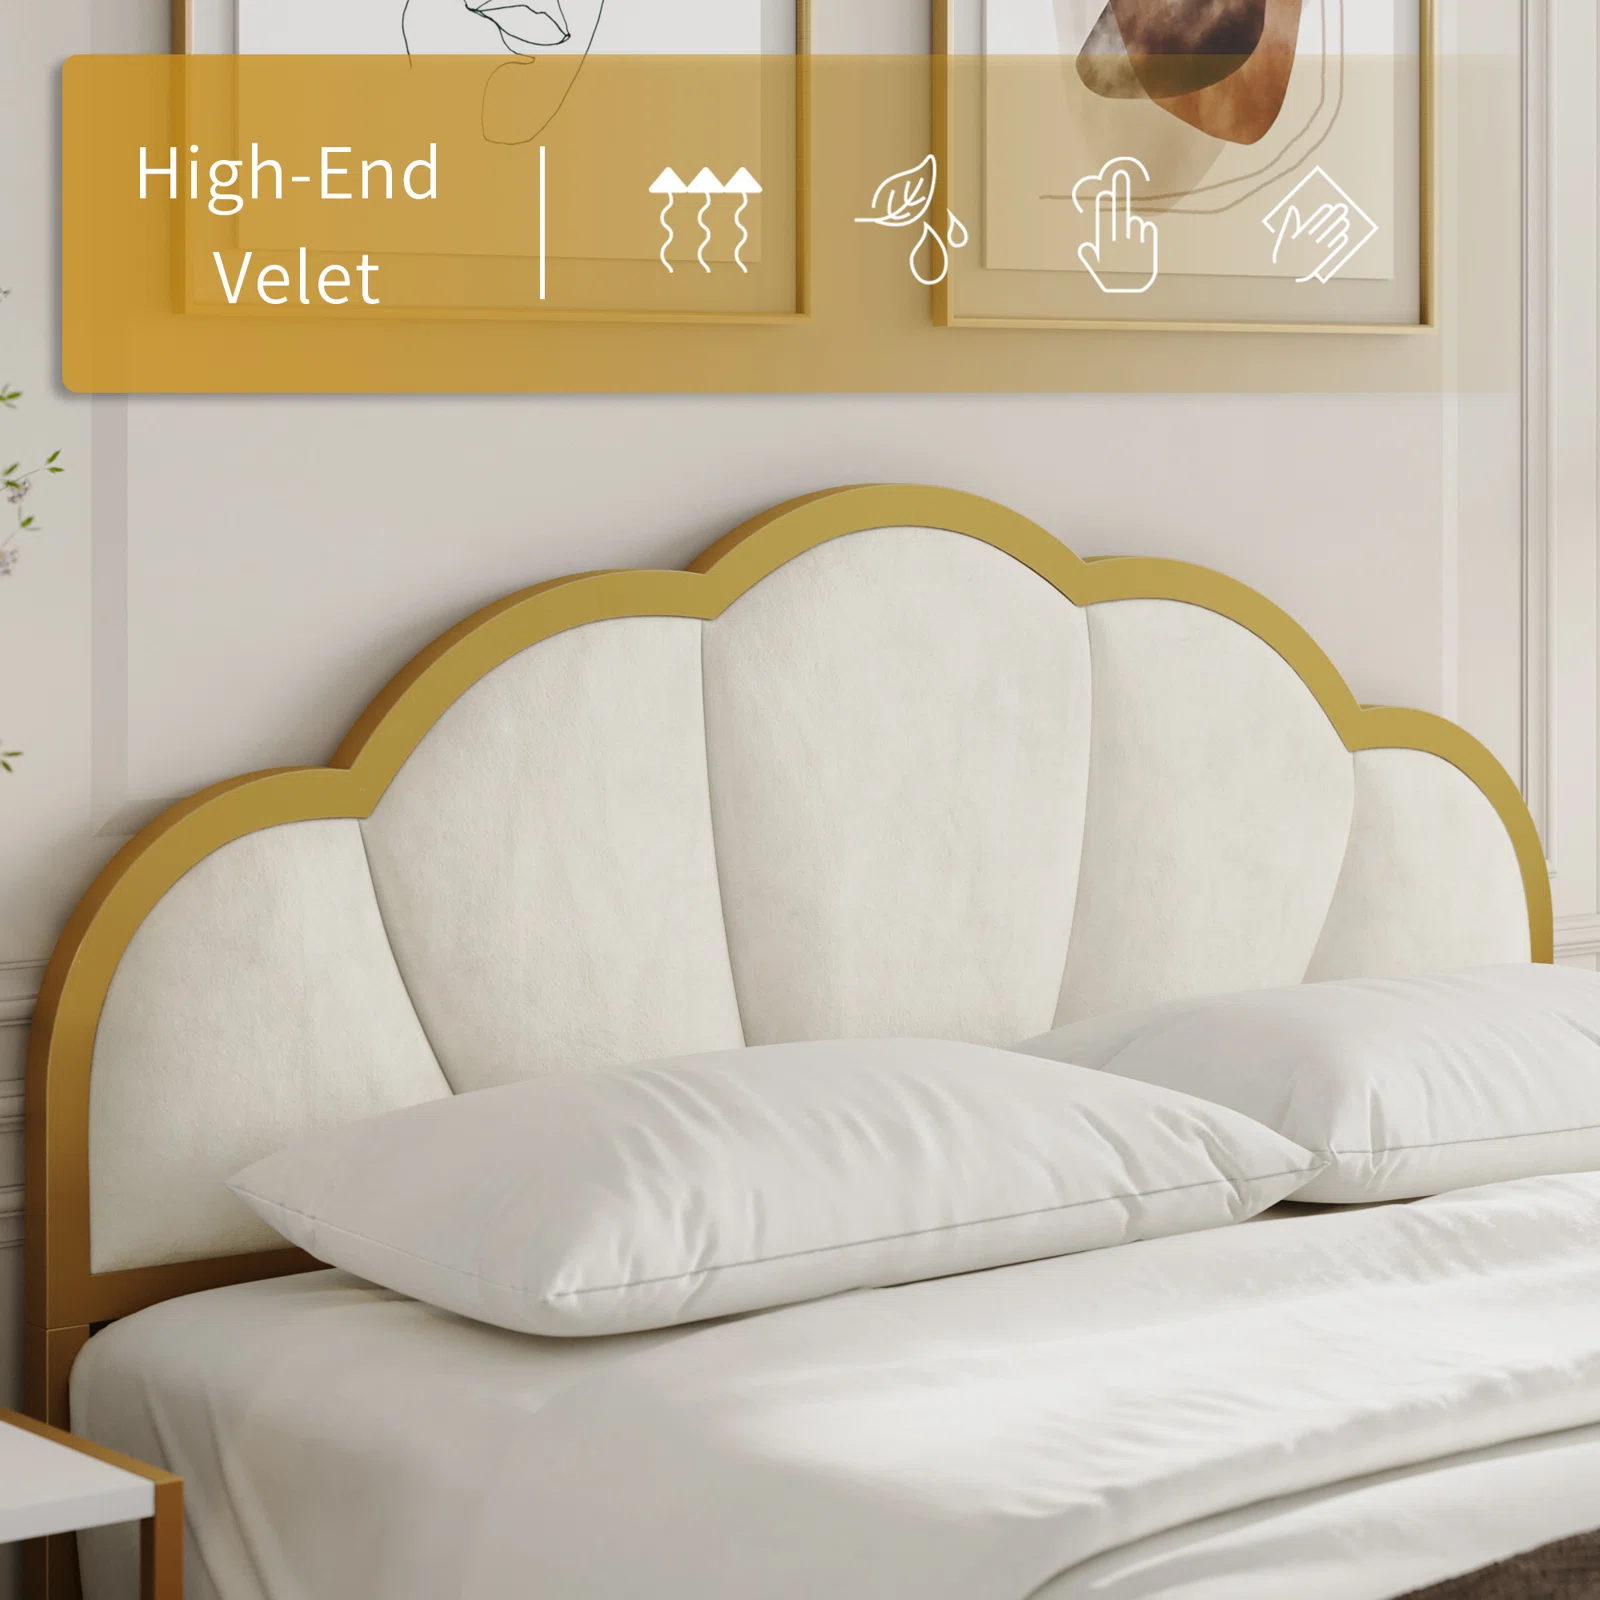 Homfa Queen Size Bed Frame, Golden Velvet Upholstered Platform Bed  with Headboard for Bedroom, Seashell Bed for Kids Girls, Beige - image 5 of 10